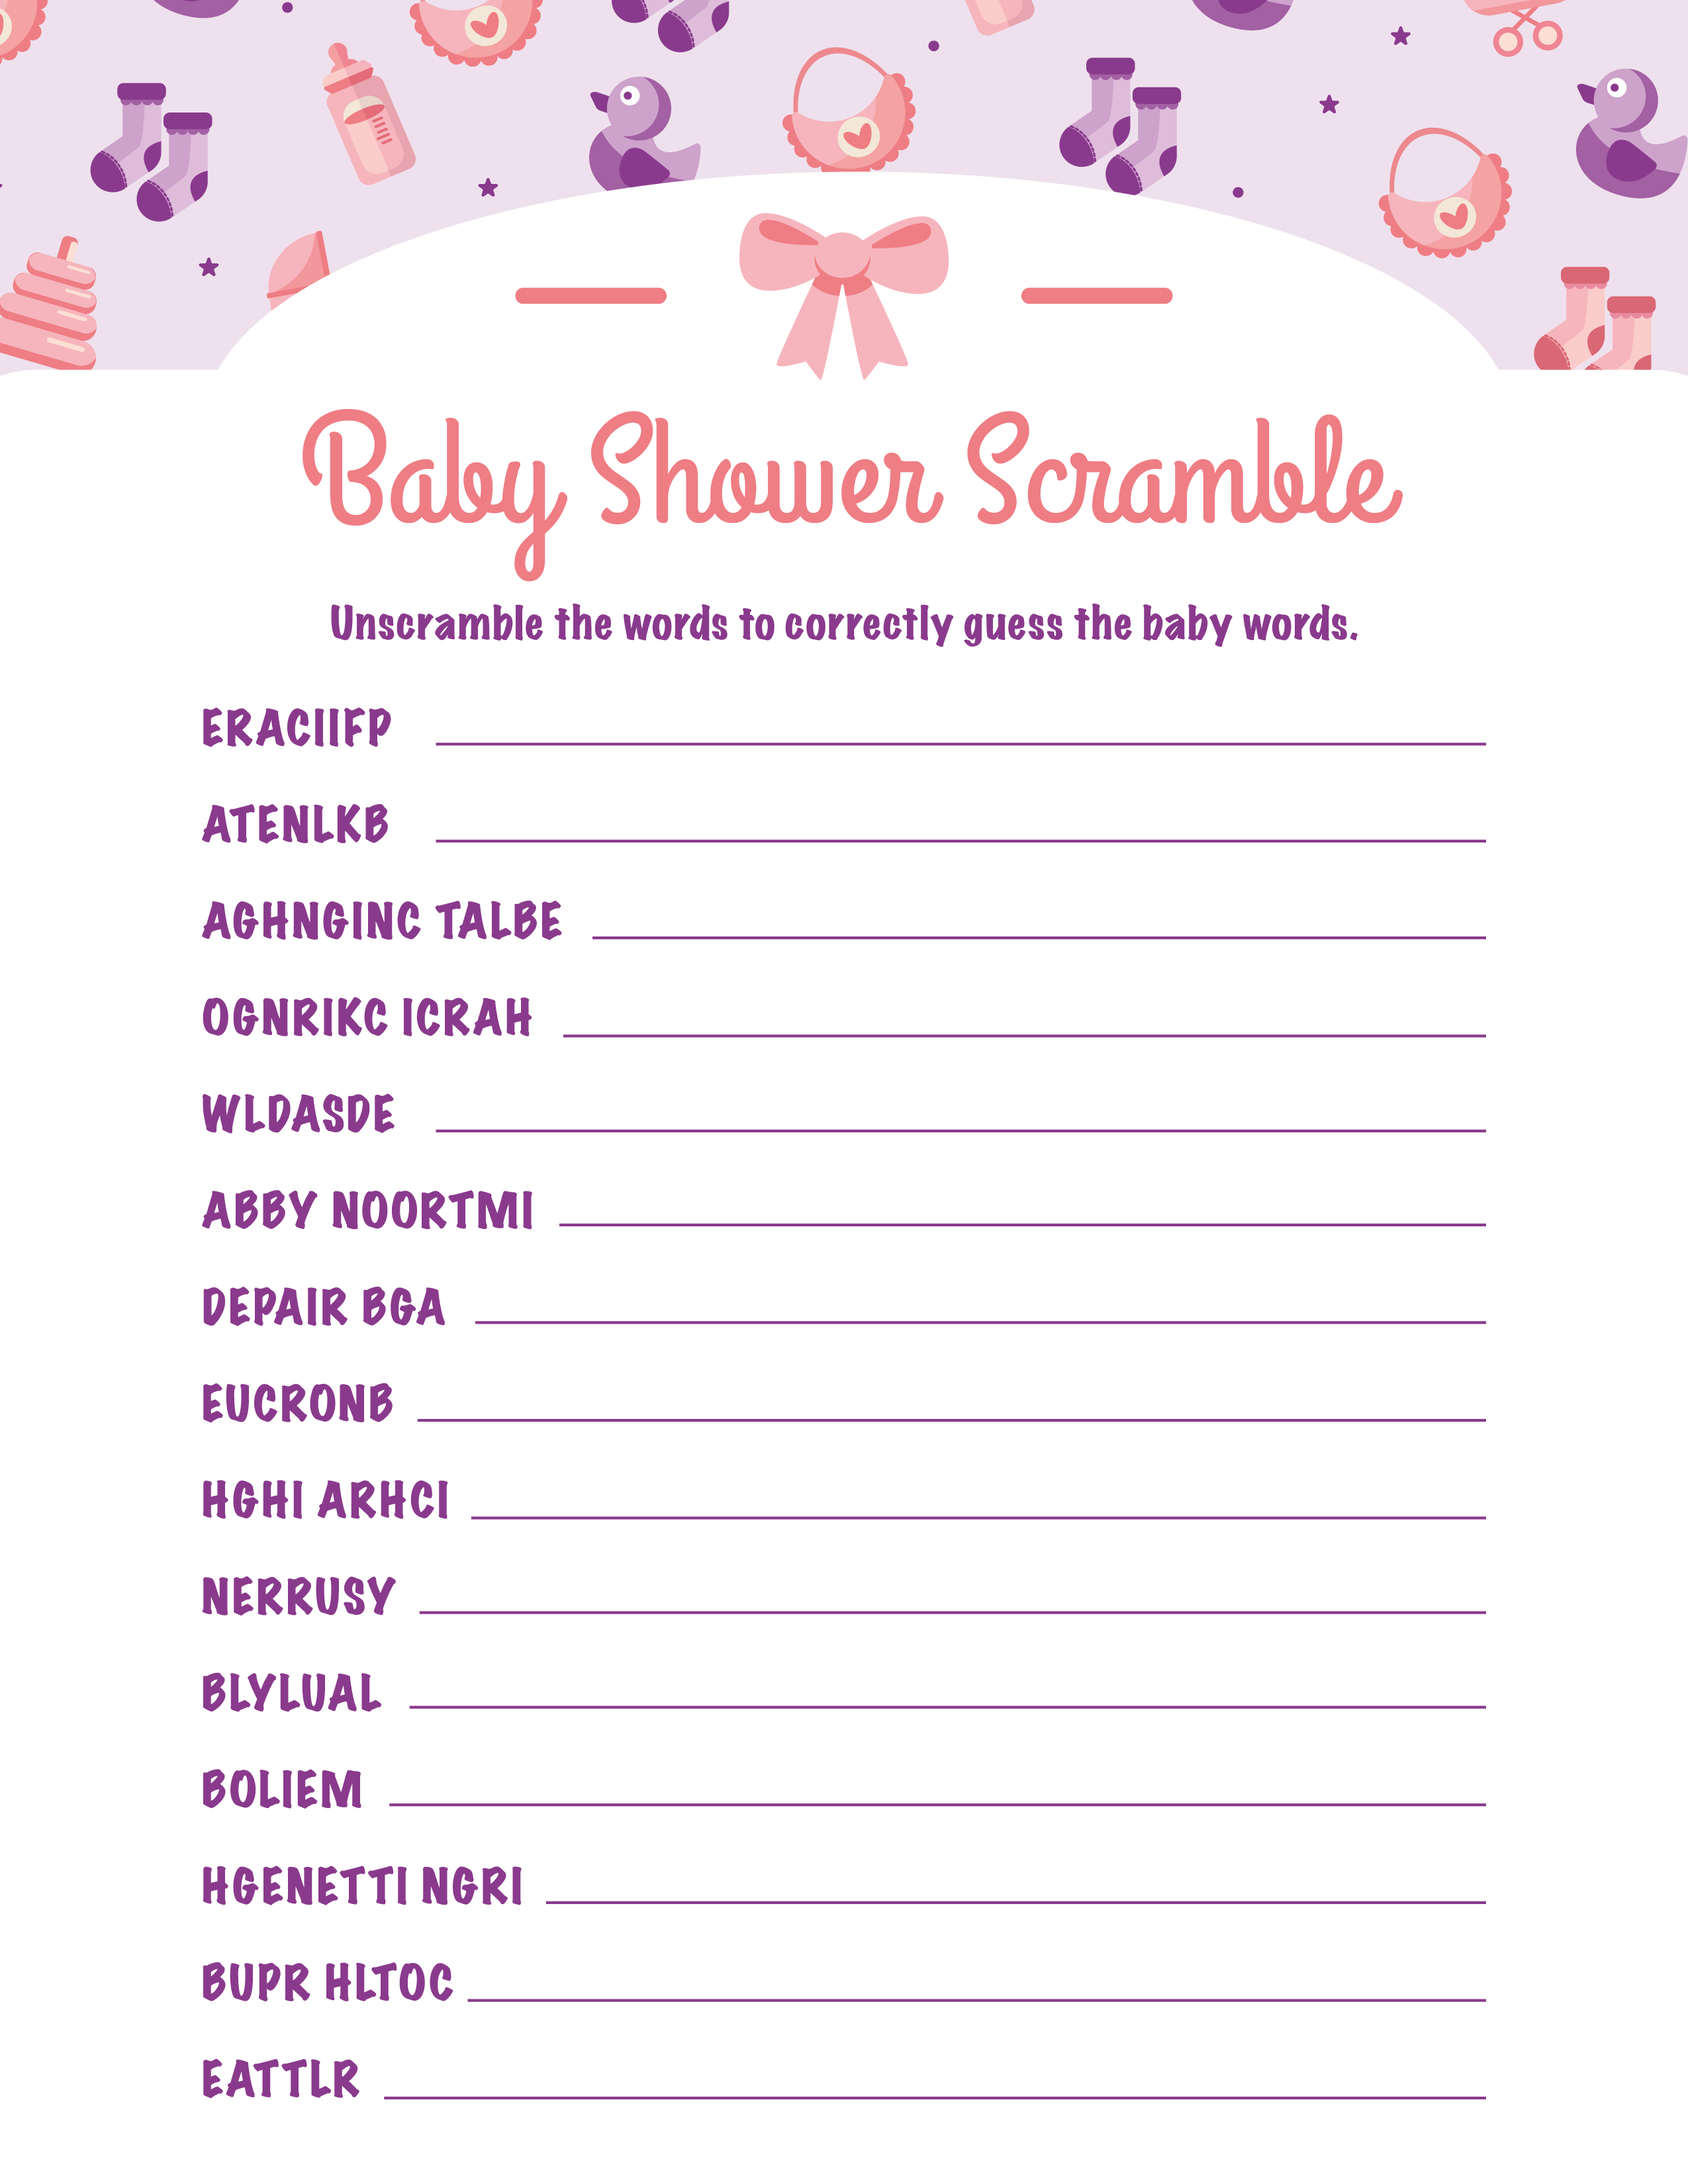 Baby shower word scramble